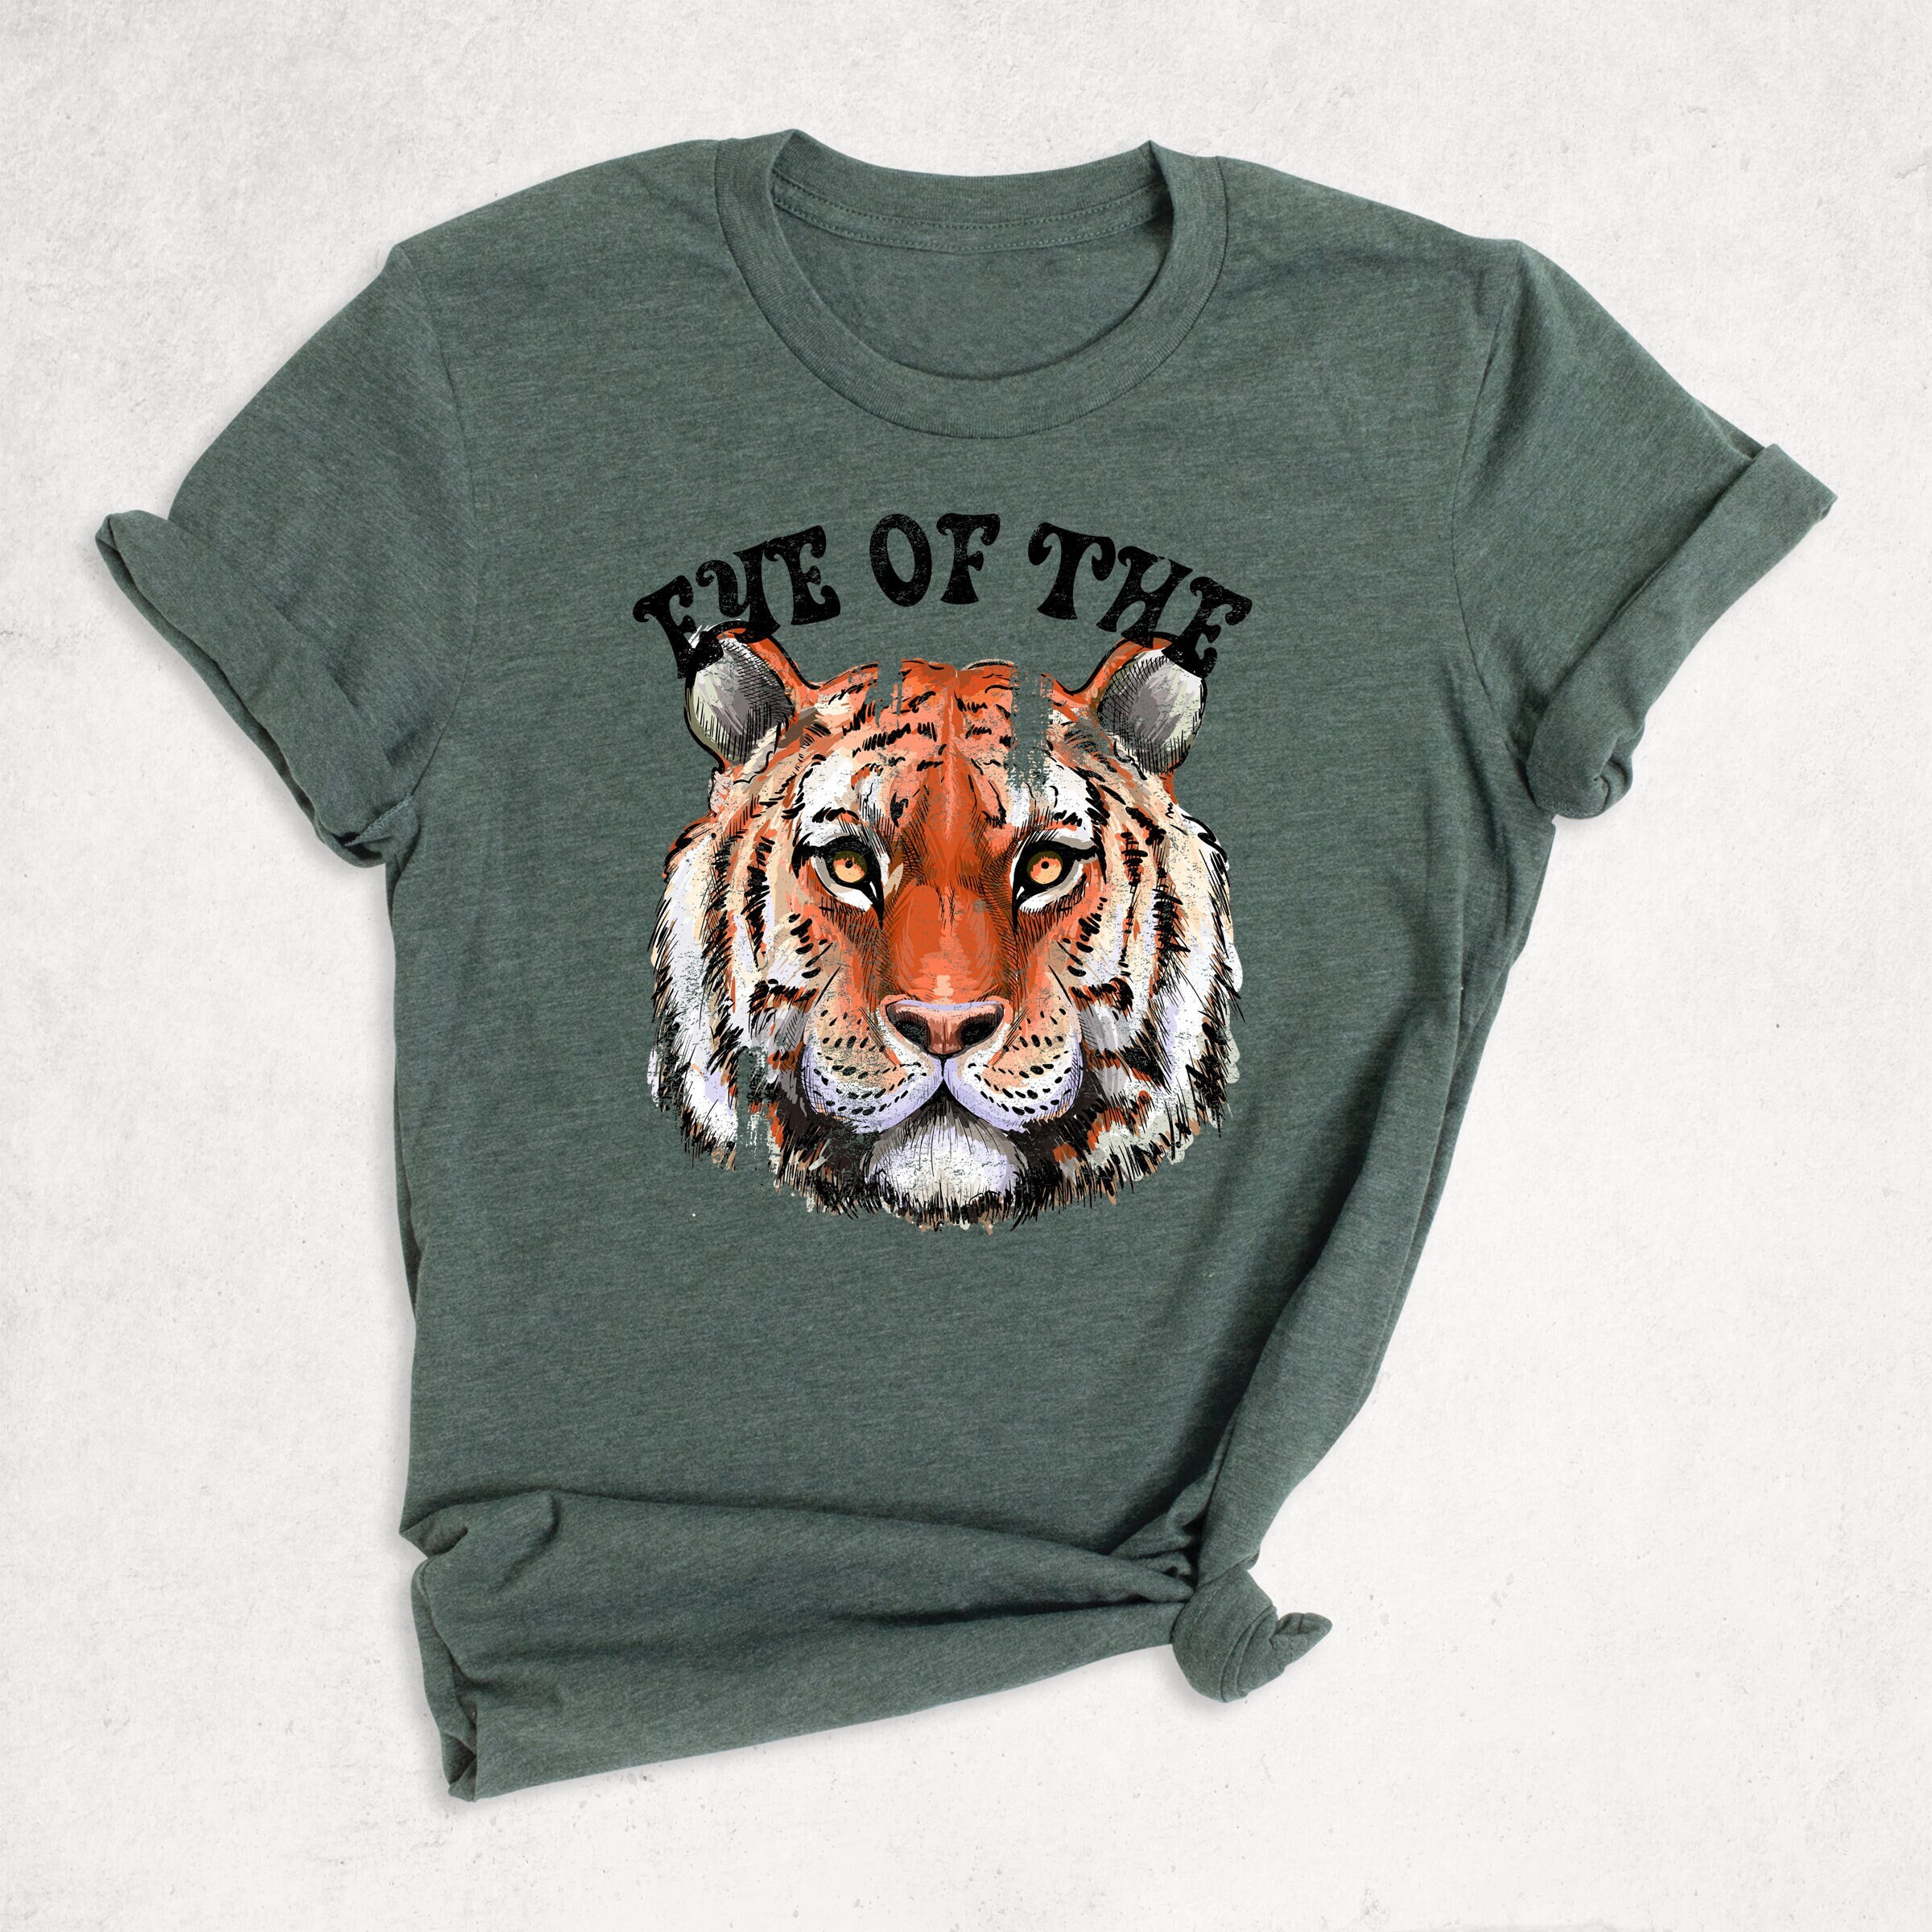 Tiger T-Shirt - Ivory  Tee shirt outfit, Tiger t shirt, Tshirt